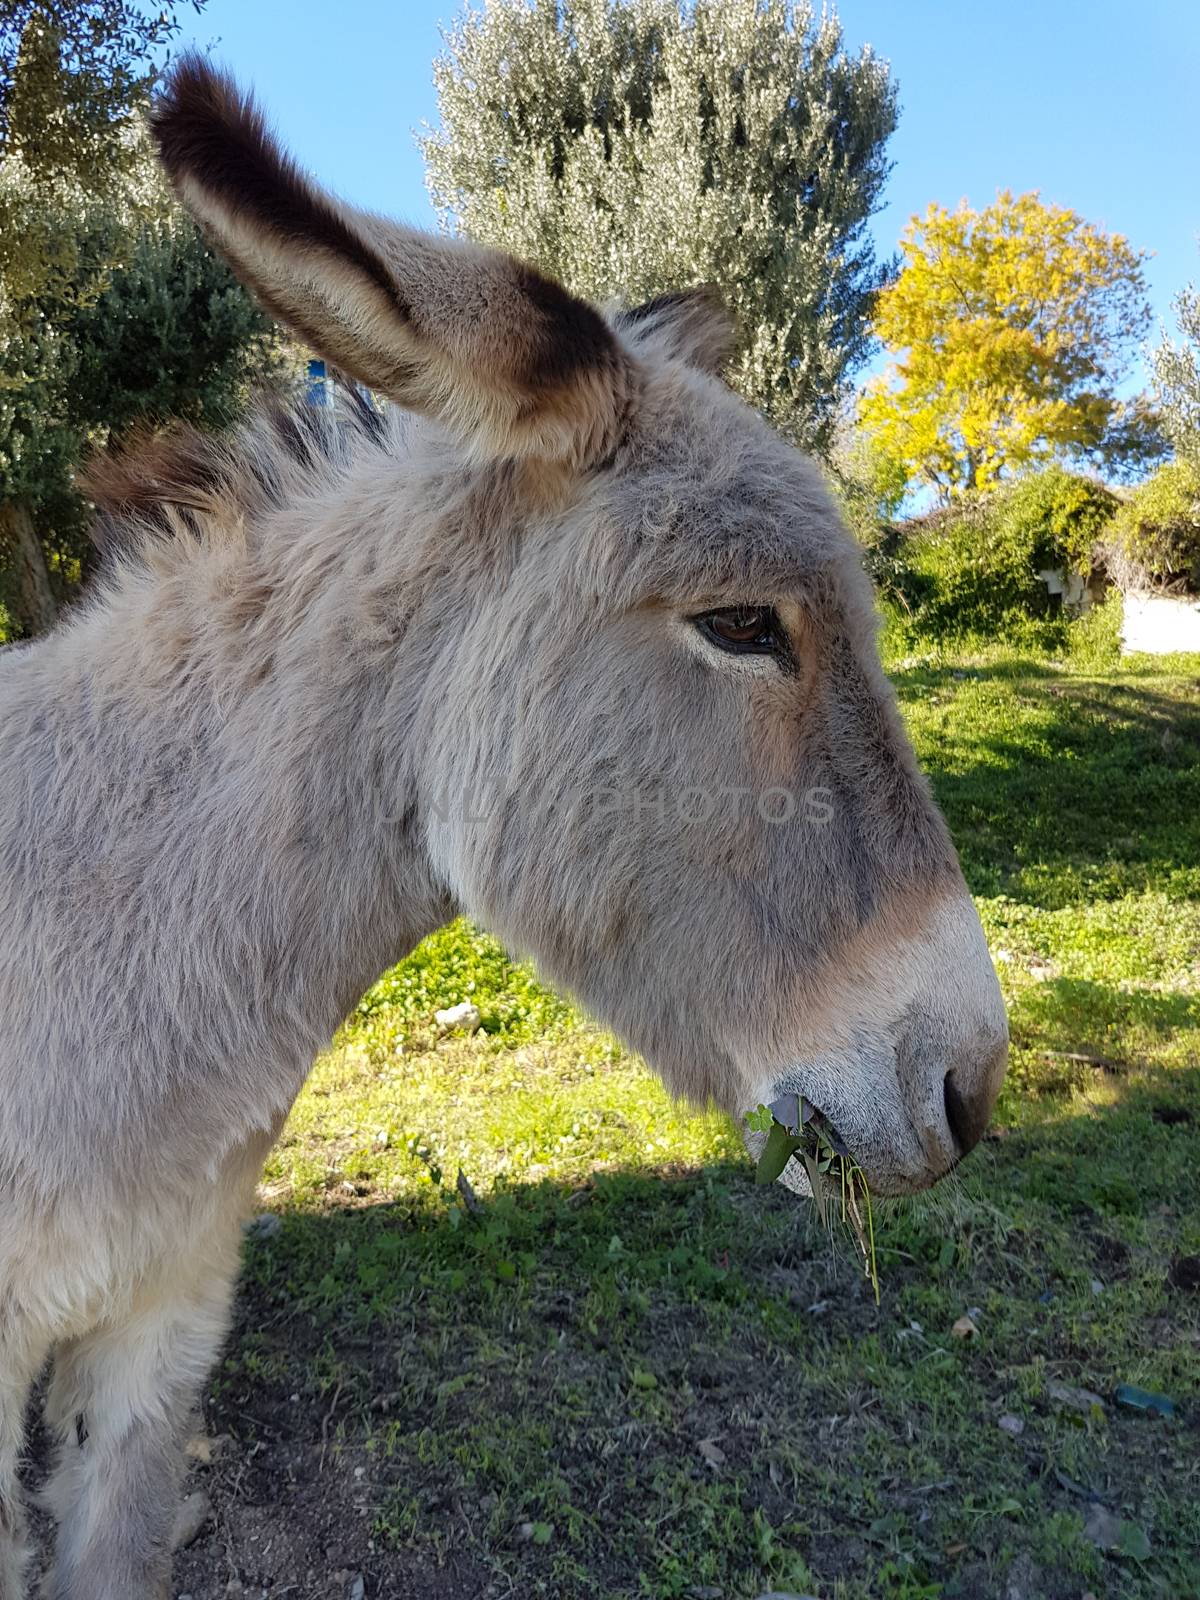 Donkey Eating Grass by bensib